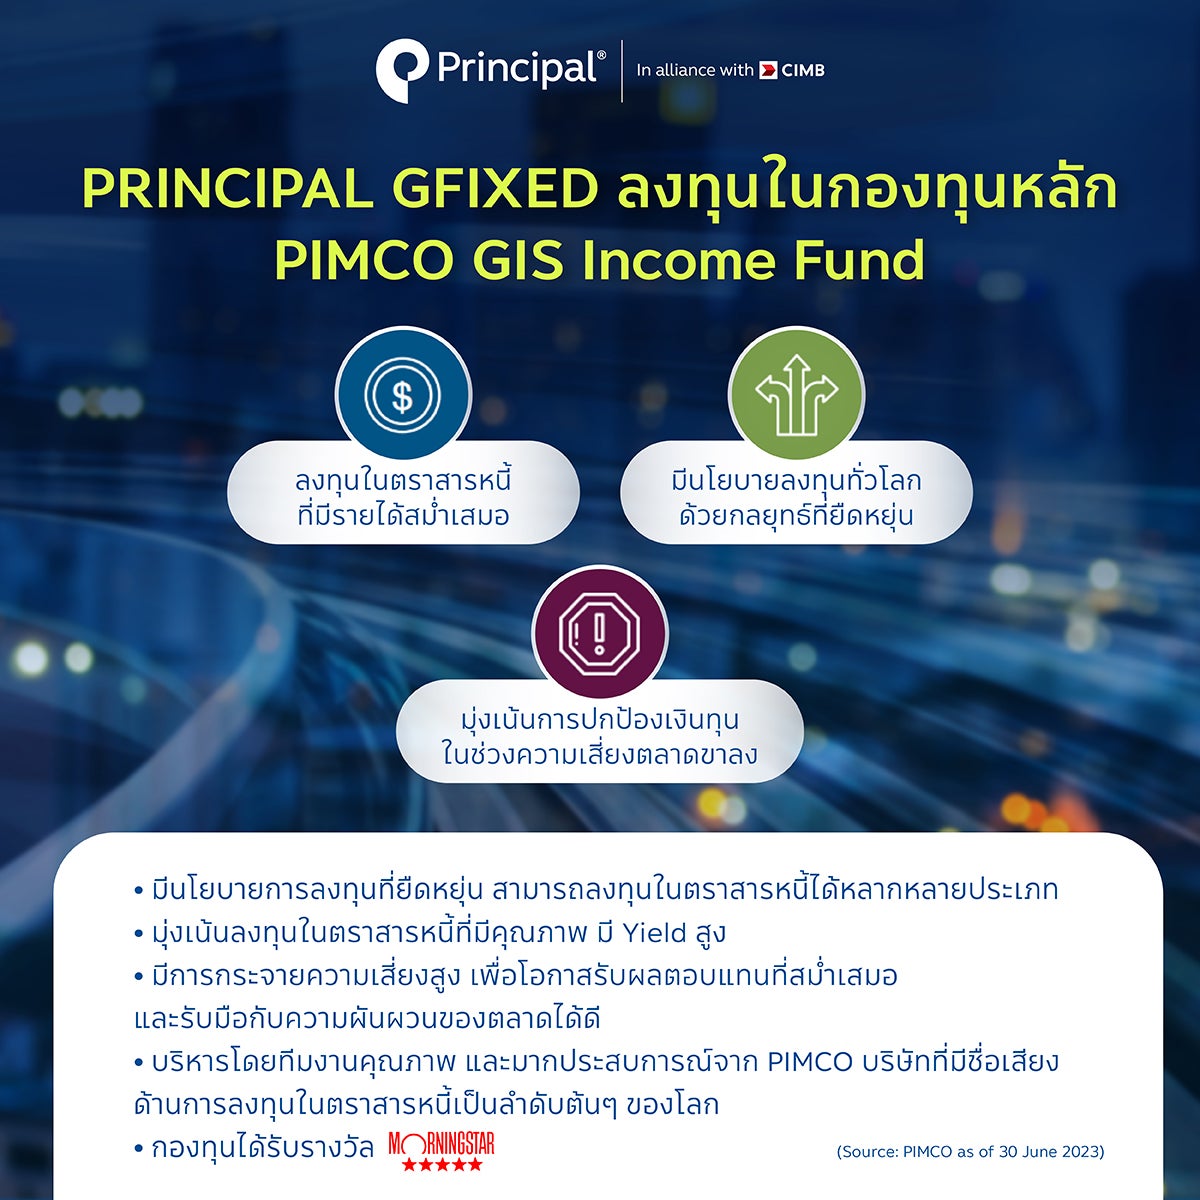 PIMCO GIS Income fund